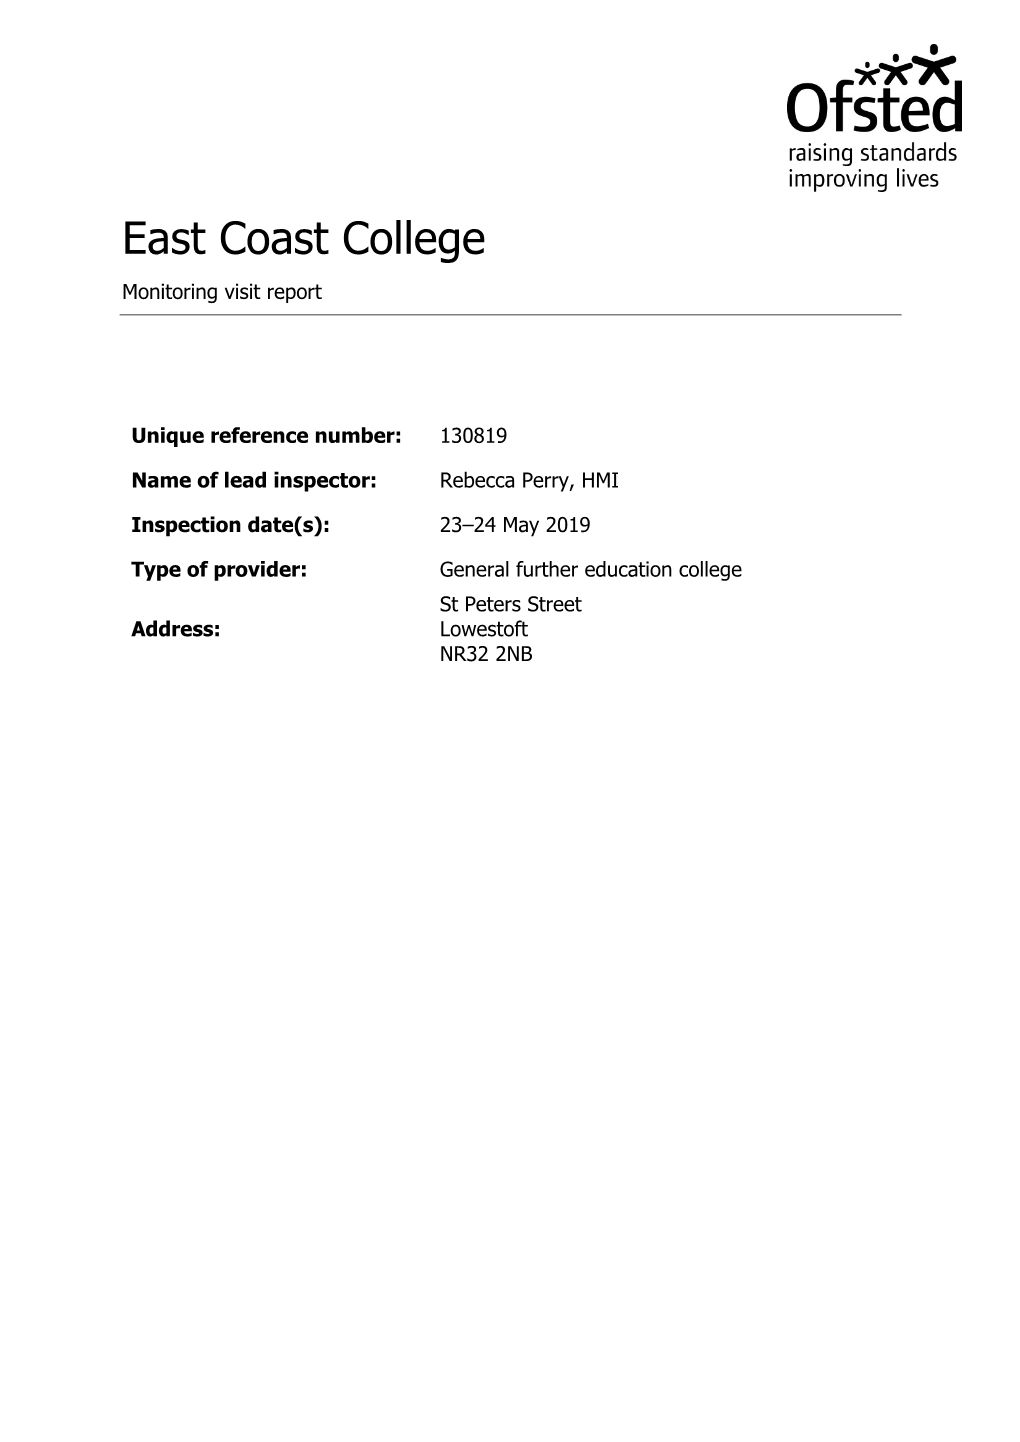 East Coast College Monitoring Visit Report